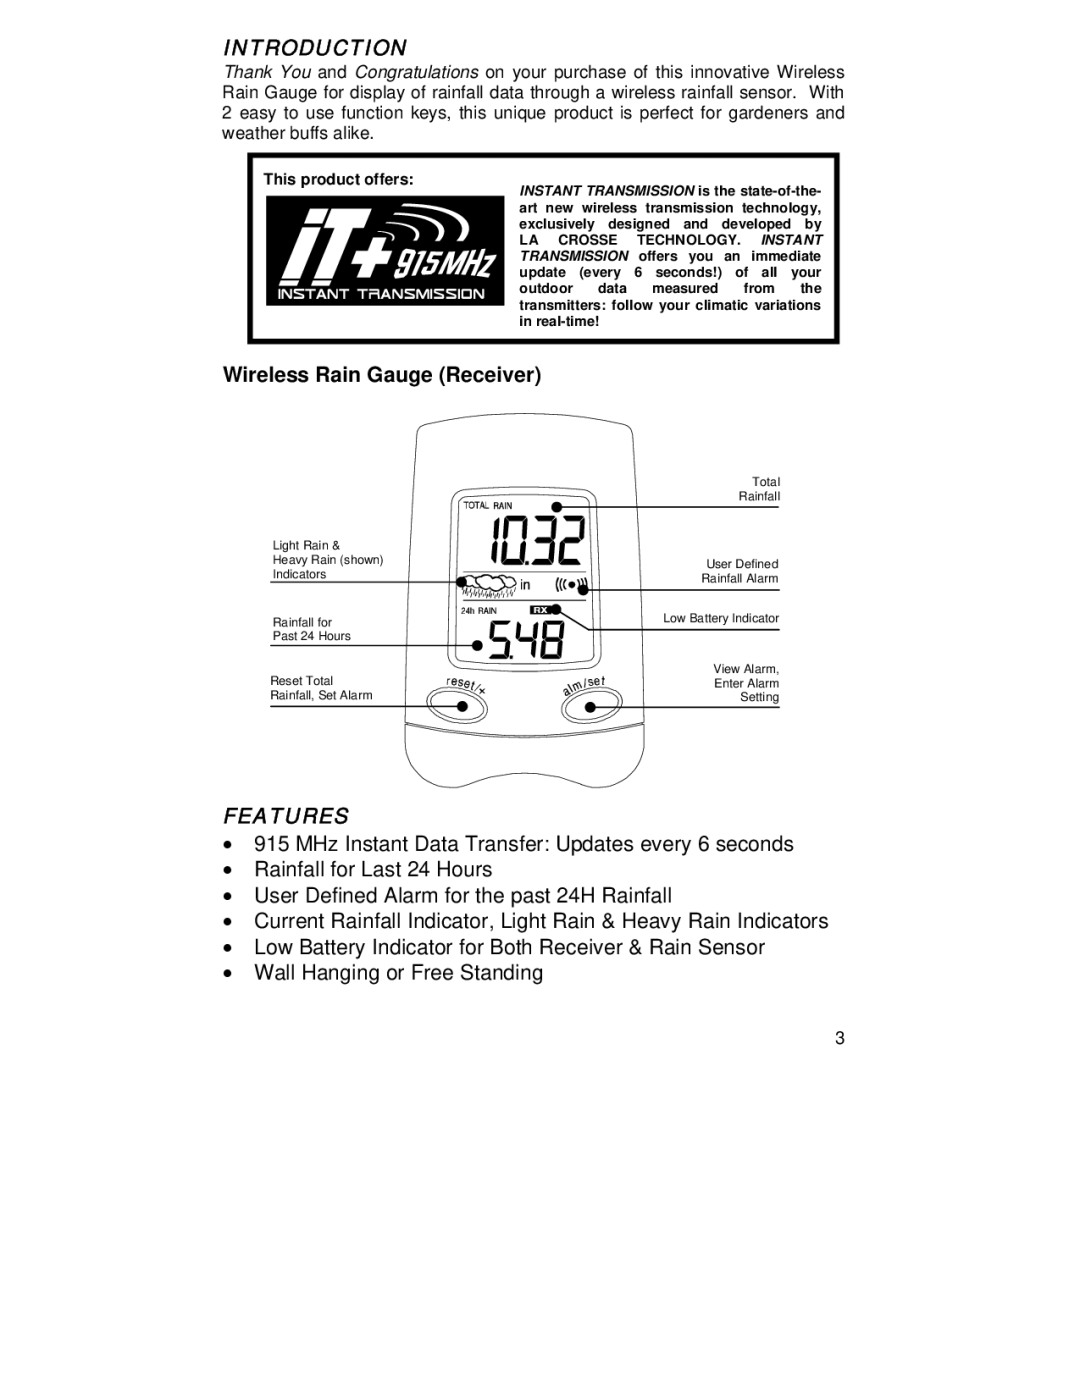 La Crosse Technology WS-9004U instruction manual Introduction, Wireless Rain Gauge Receiver, Features 